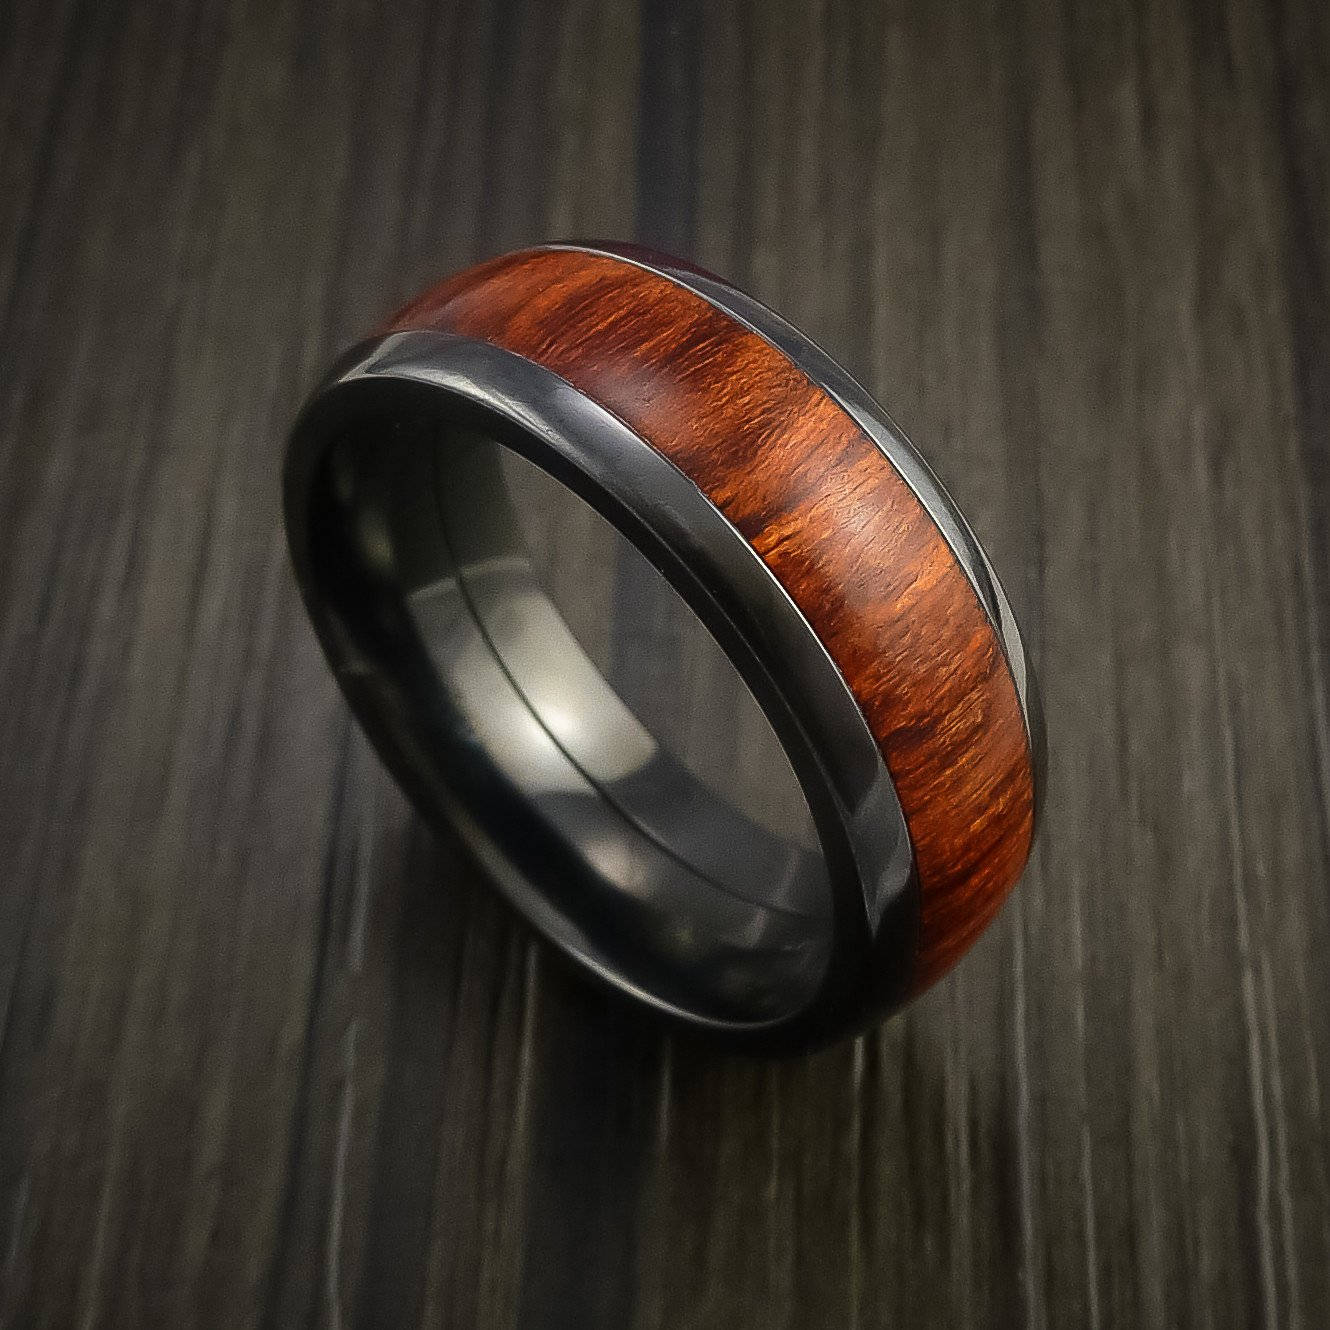 Black Zirconium Ring Wood Inlay Wedding Band Comfort Fit Shatteproof LWR 